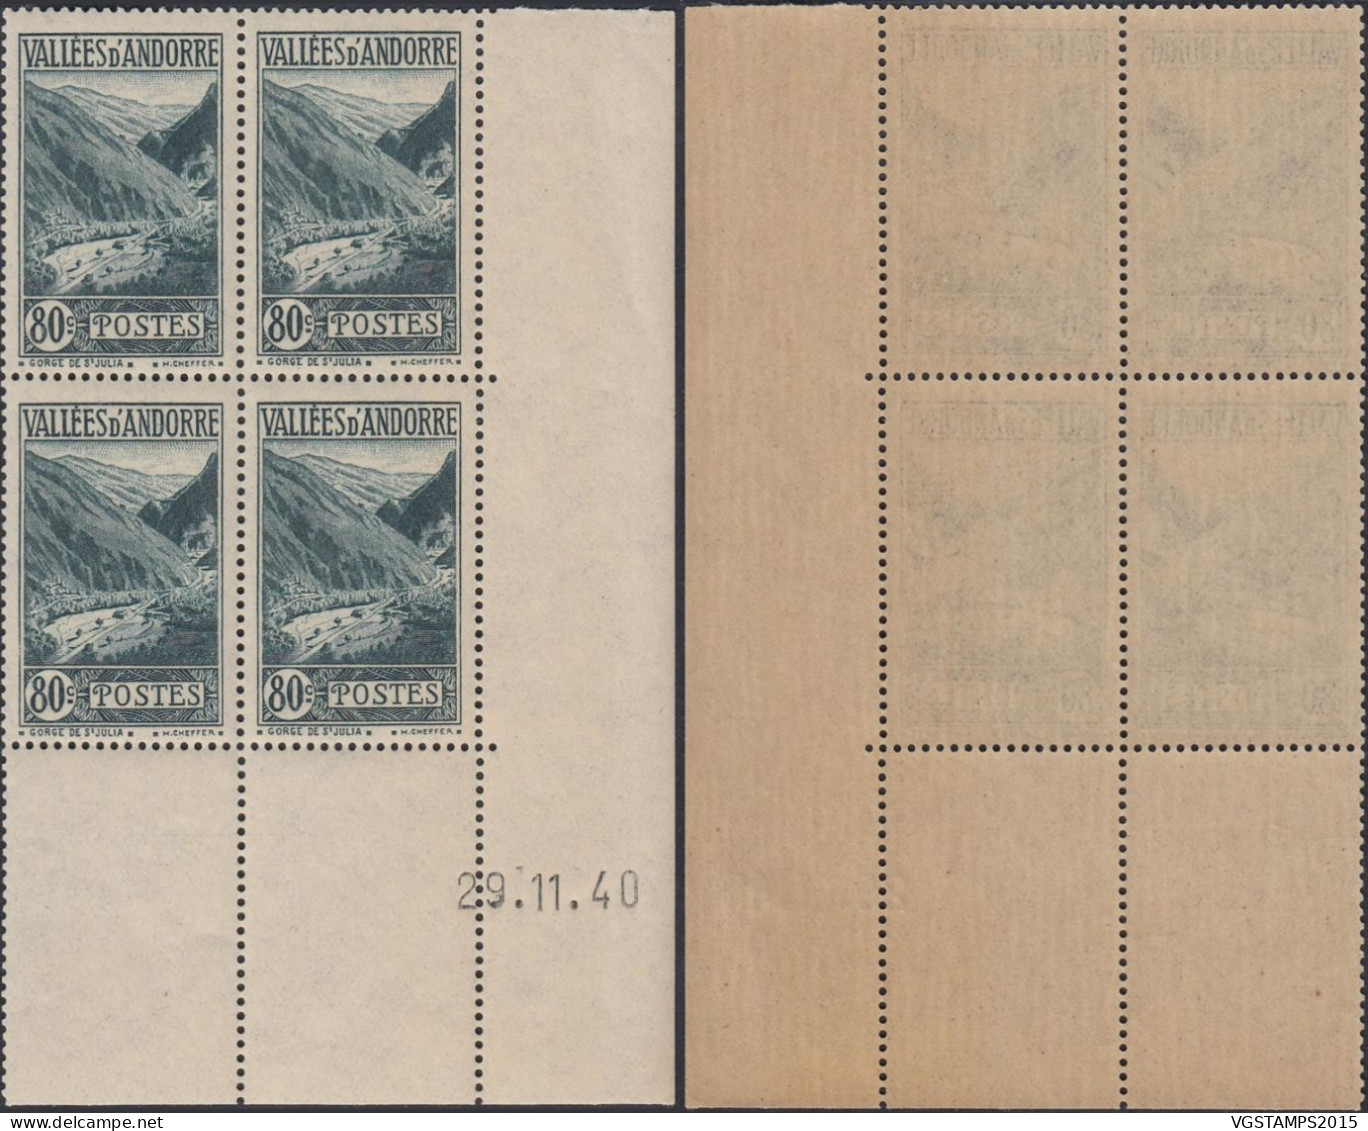 Andorre 1941 - Andorre Française - Timbres Neufs. Yvert Nr.: 72. Michel Nr.: 77. Coin Daté: 29/11/40.... (EB) AR-02068 - Ongebruikt